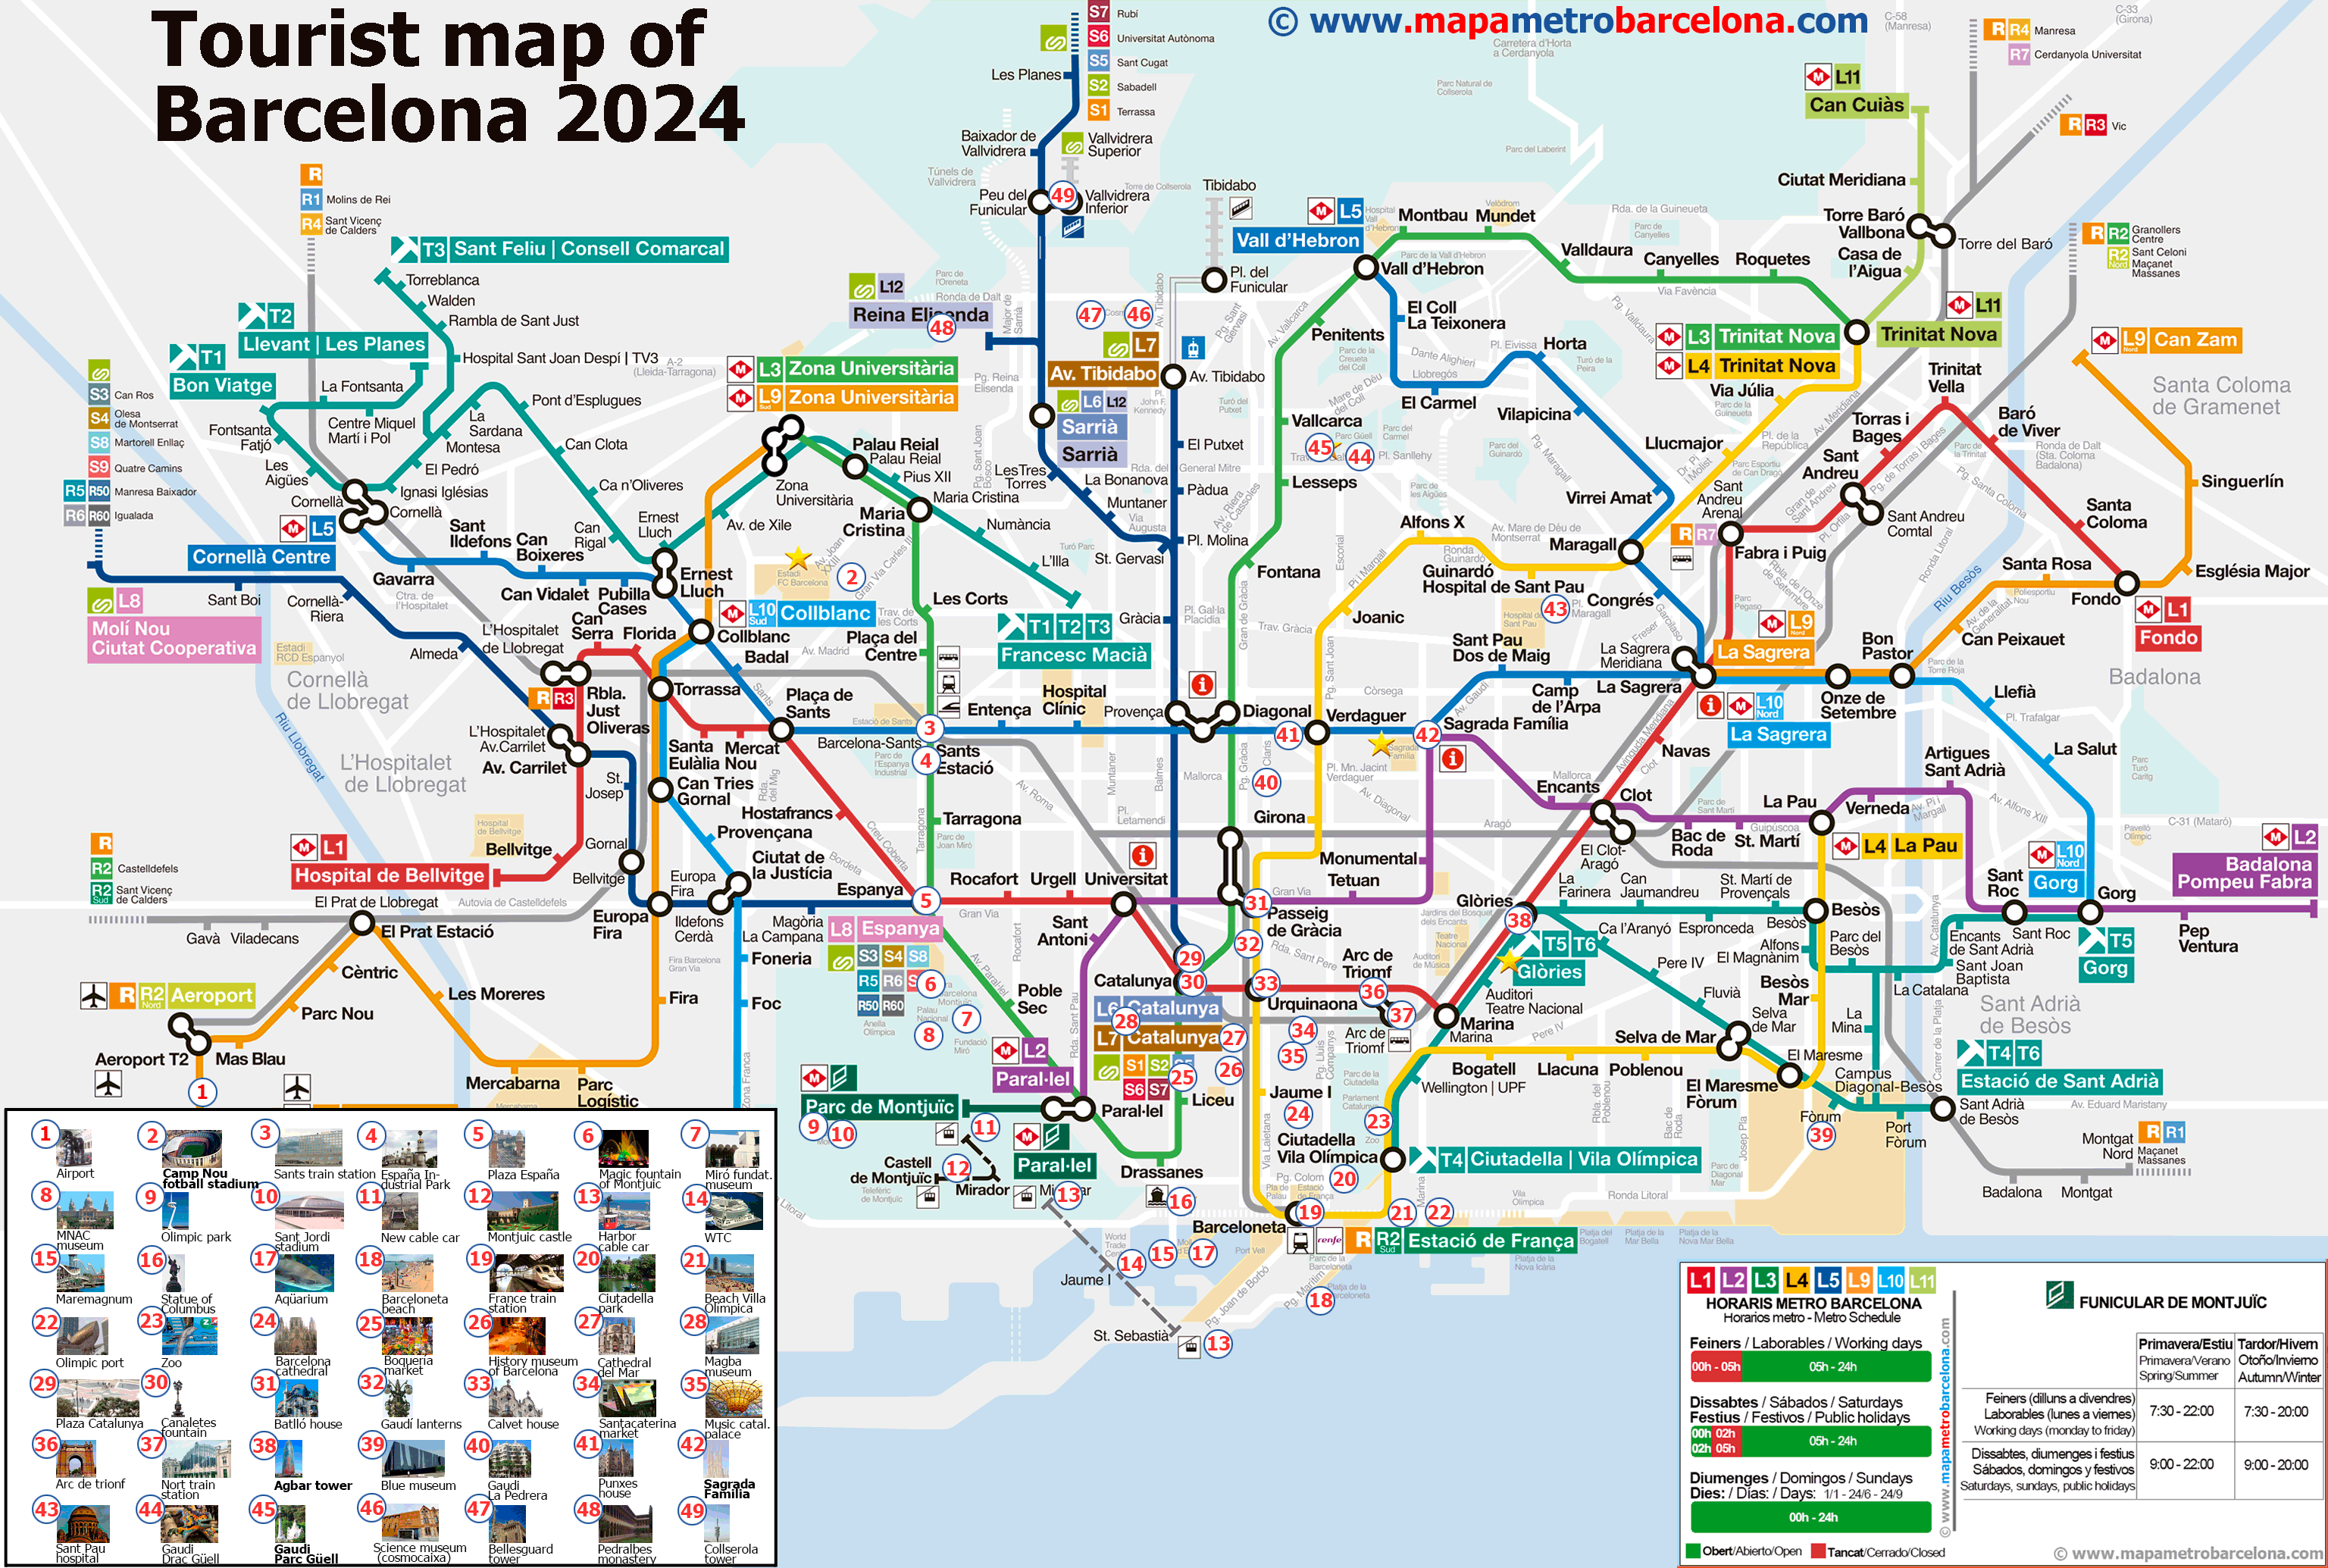 Barcelona tourist map 2024